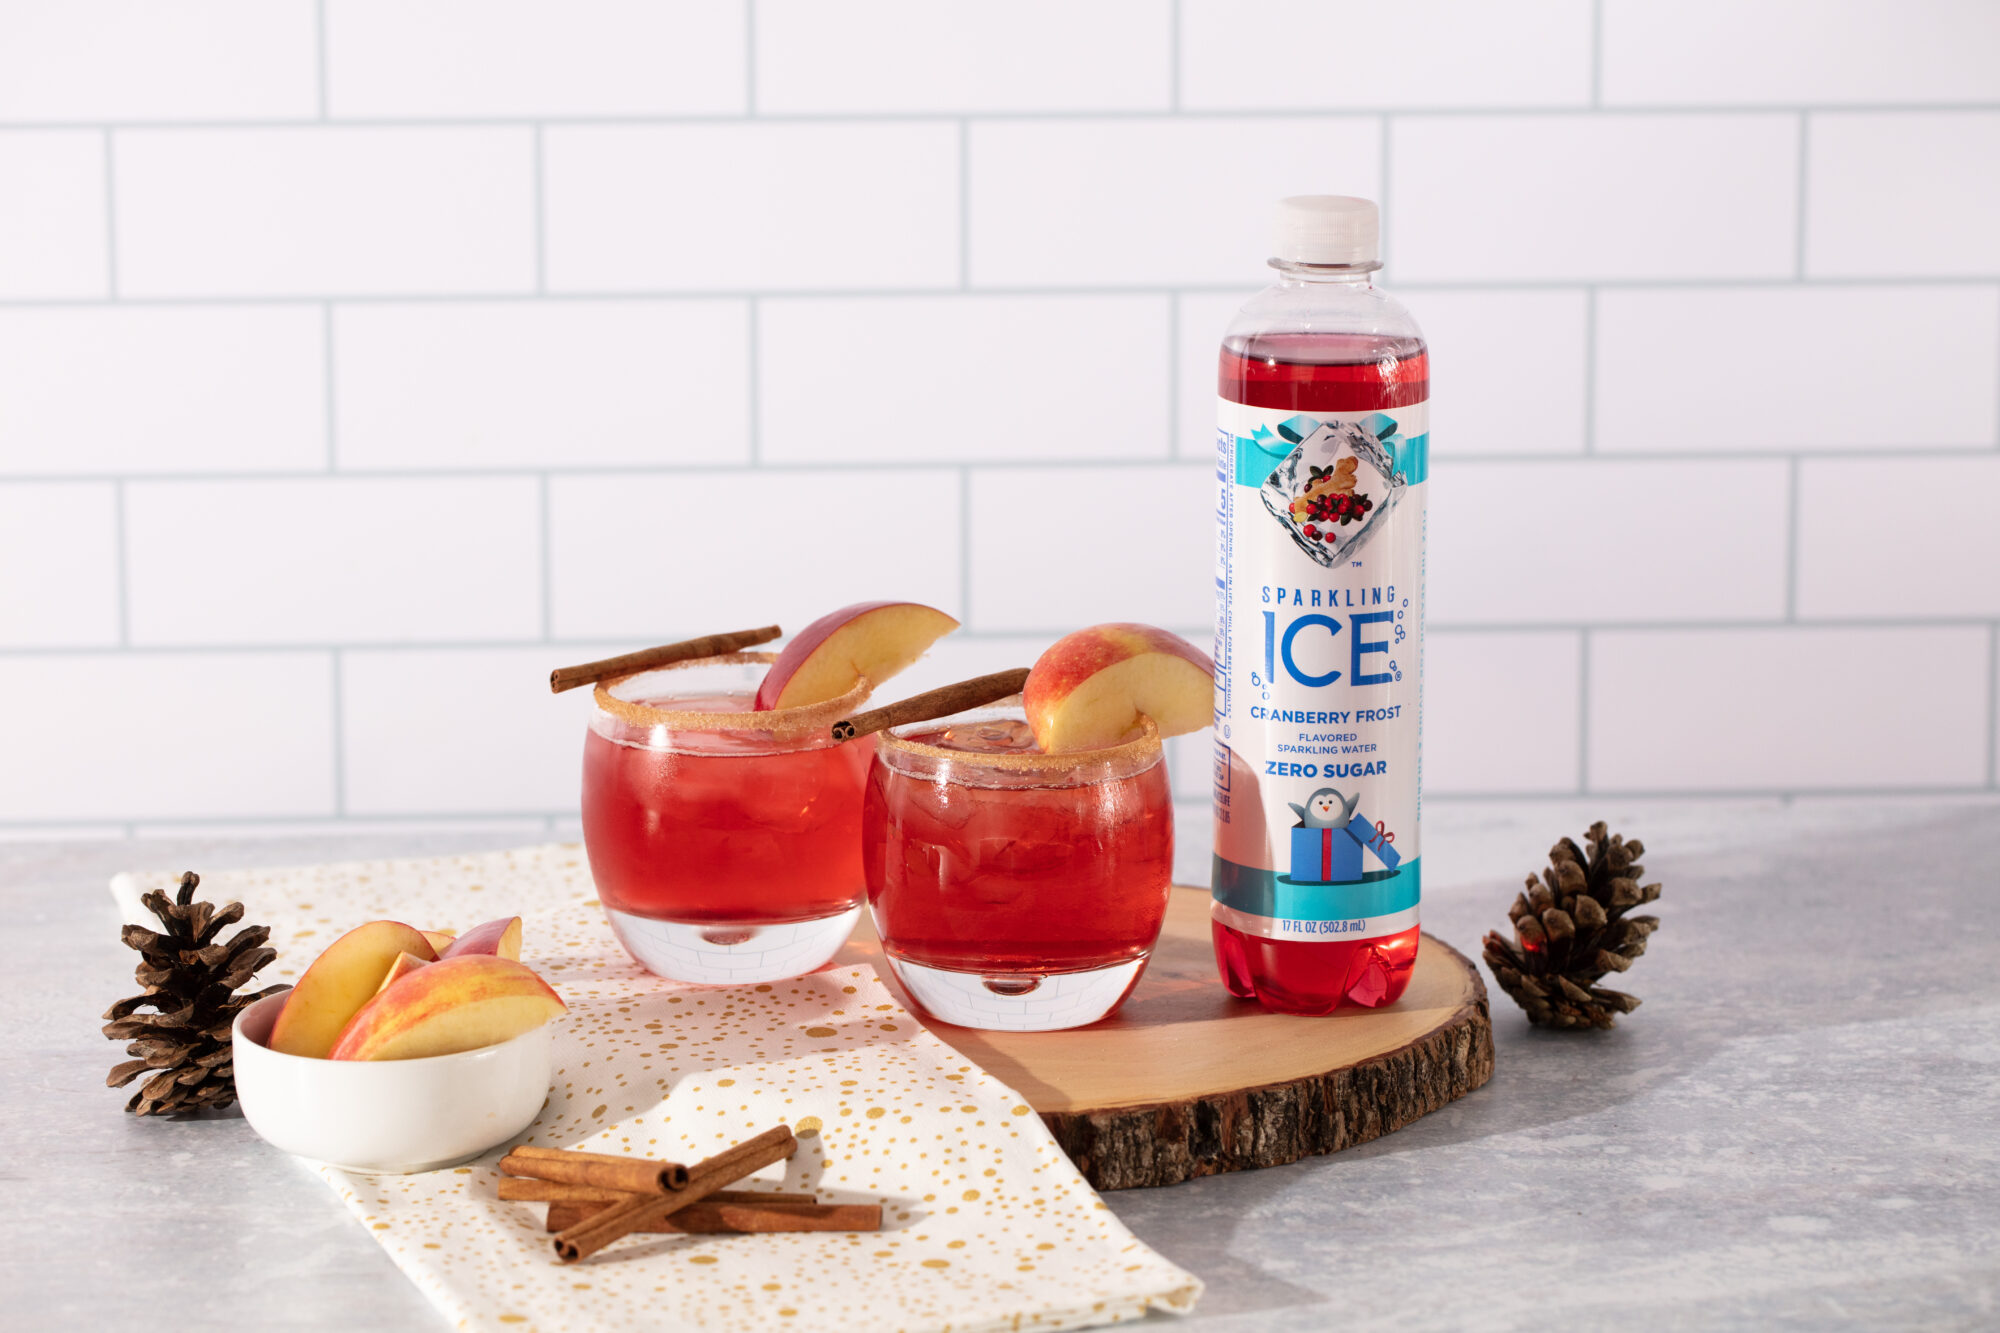 Sparkling Ice Cranberry Apple Cider Cocktail